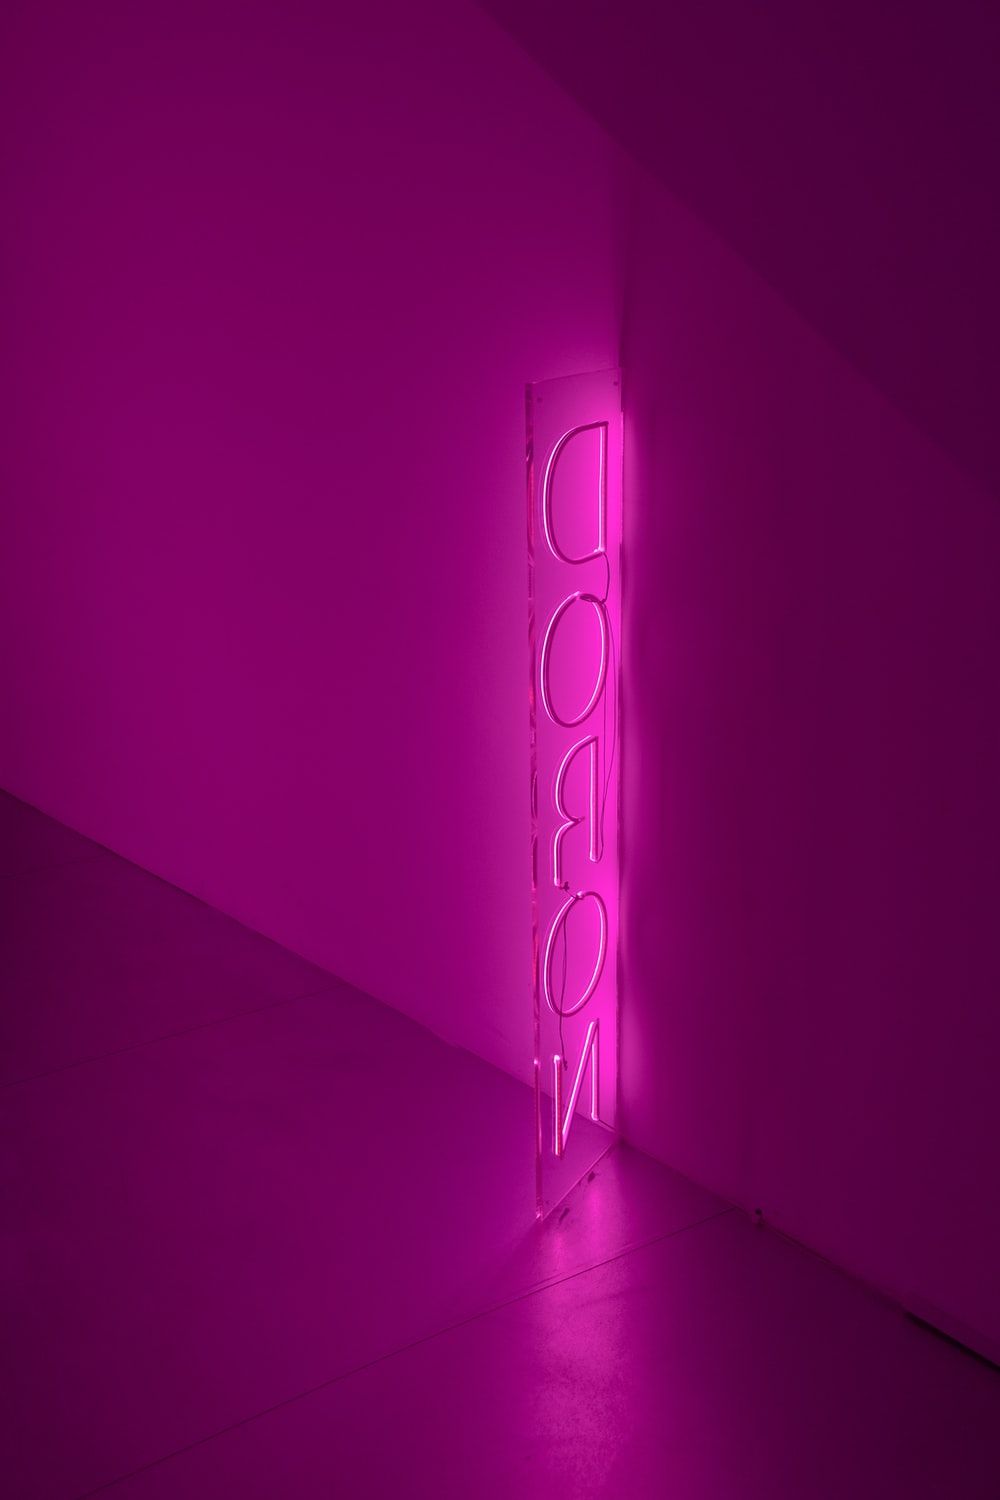 Purple Neon Picture. Download Free Image